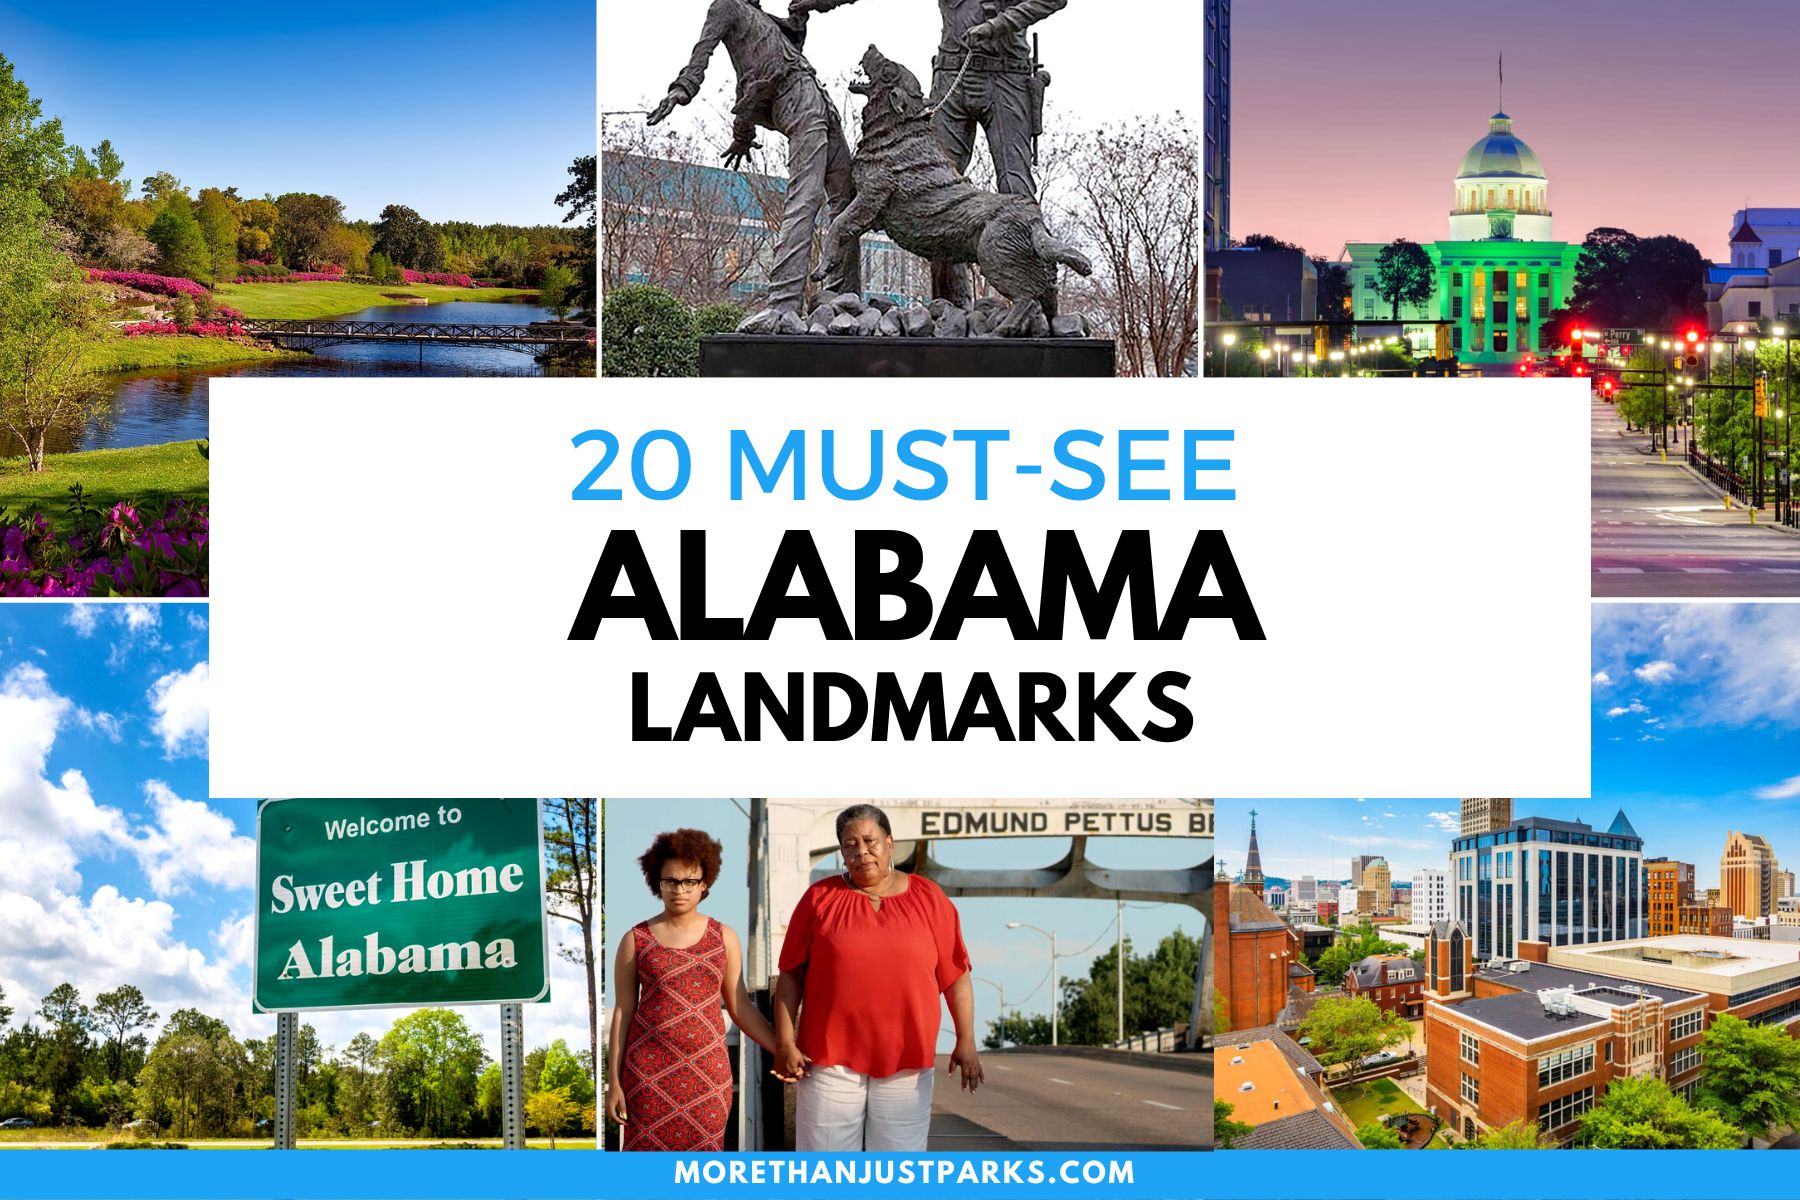 20 MUSTSEE Alabama Landmarks (Expert Guide + Photos)